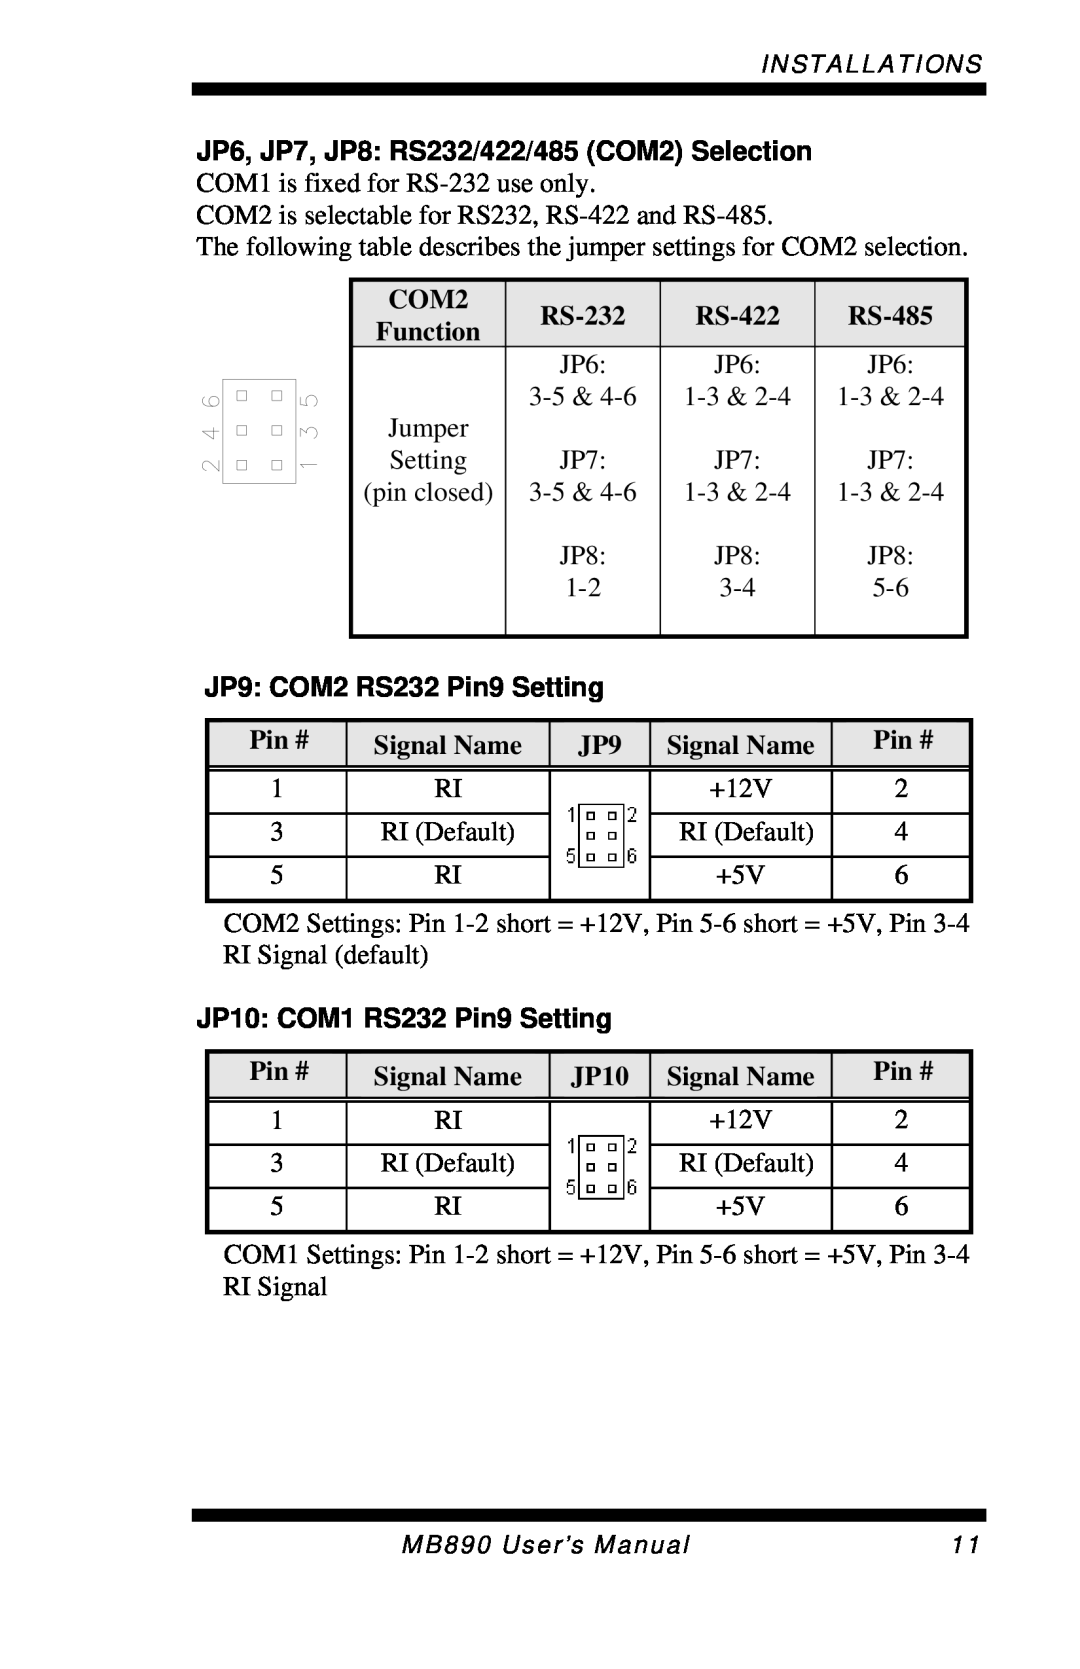 Intel MB890 user manual JP9 COM2 RS232 Pin9 Setting, JP10 COM1 RS232 Pin9 Setting 